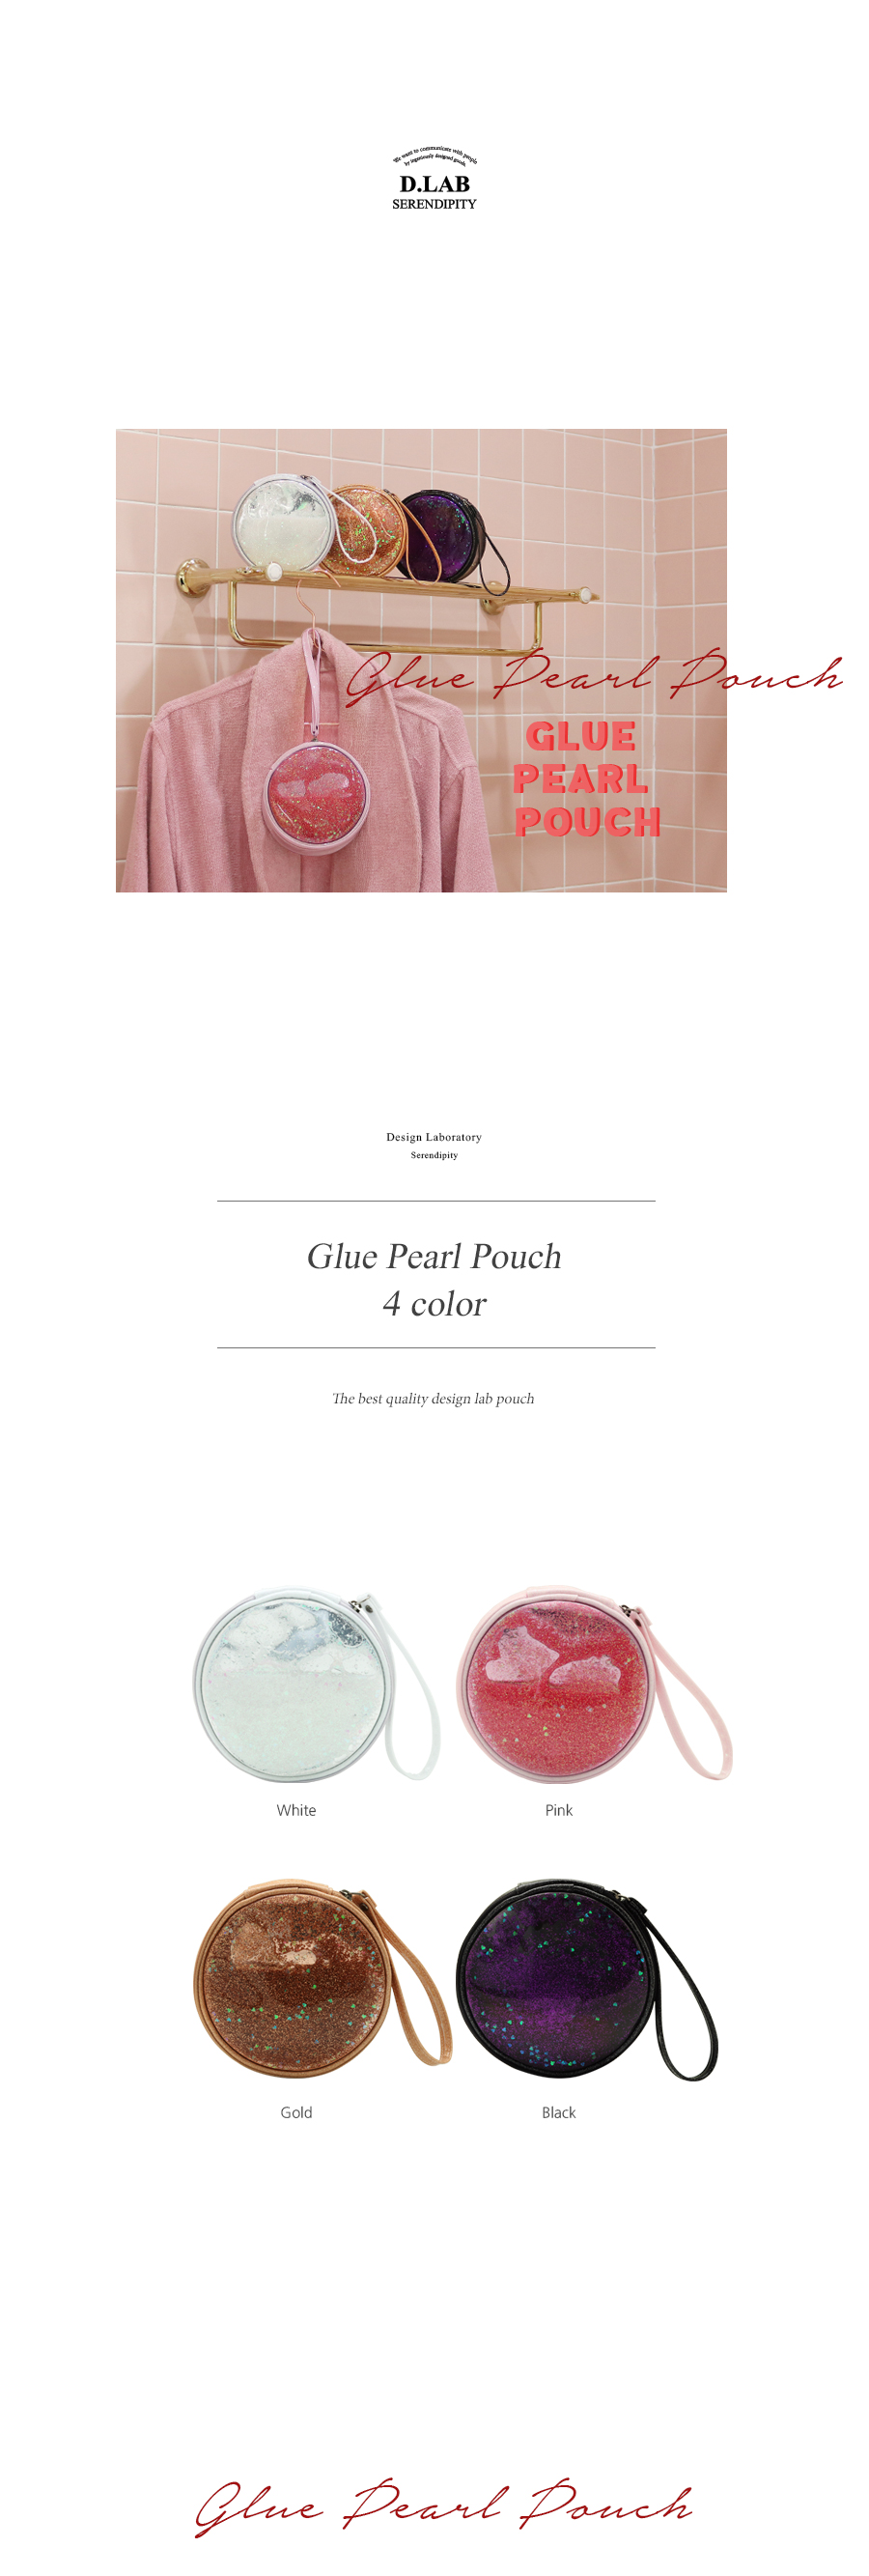 D.LAB Glue Pearl Pouch - White - 디랩, 18,800원, 다용도파우치, 지퍼형